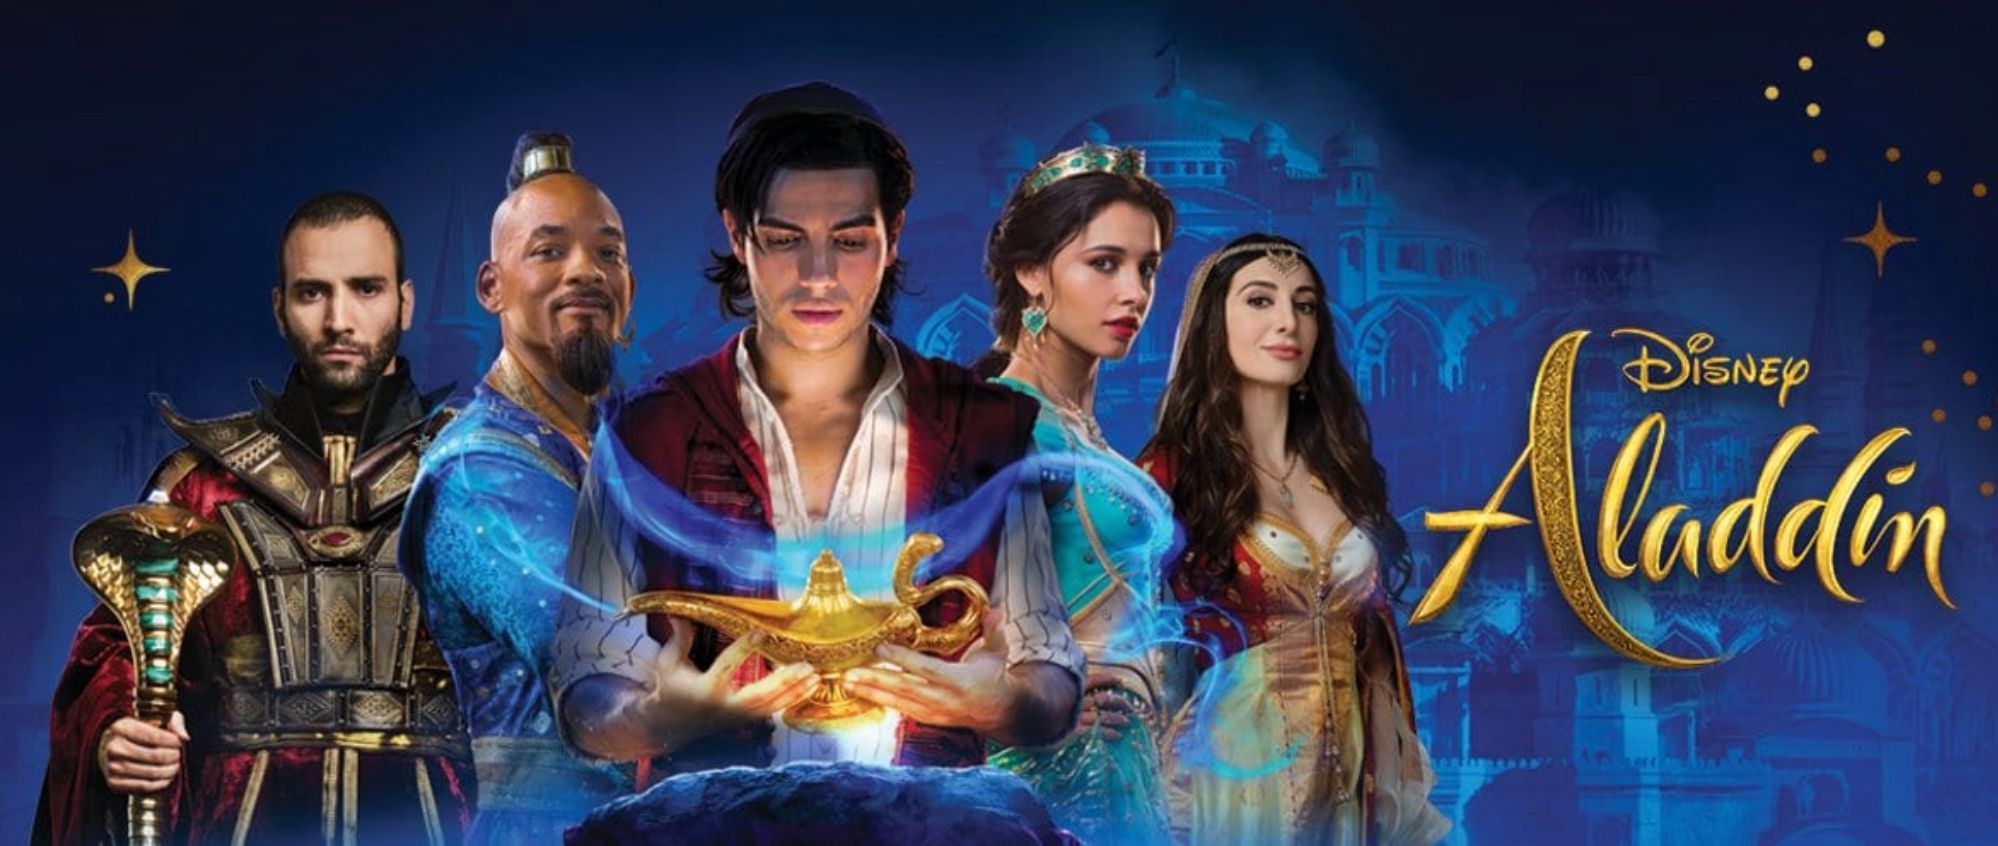 New Aladdin Remake Banner Image Spotlights the Cast